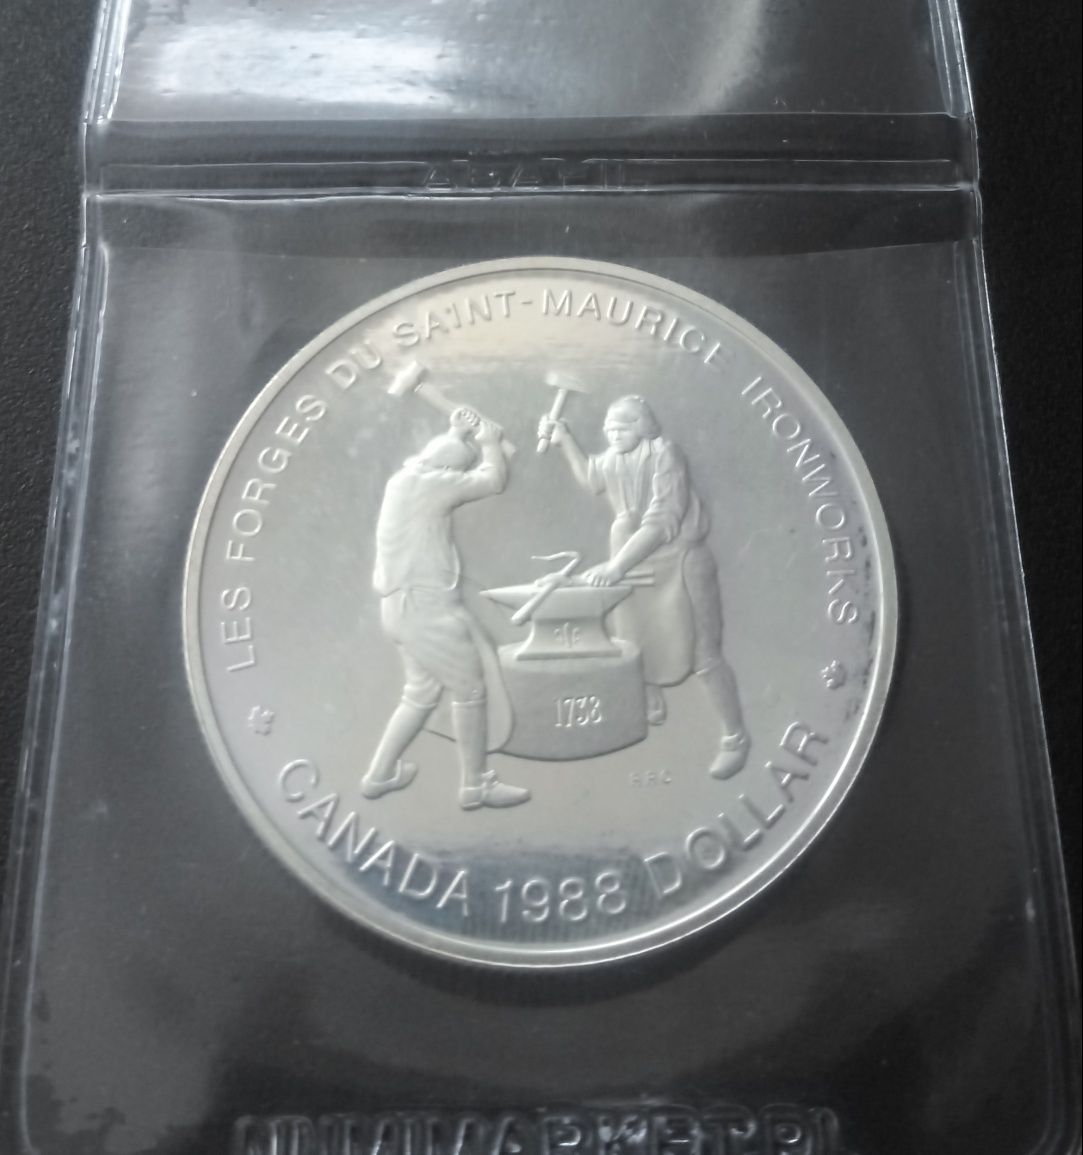 Moneta Dolar Kanada 1988 Huta żelaza Saint-Maurice Kuźnia